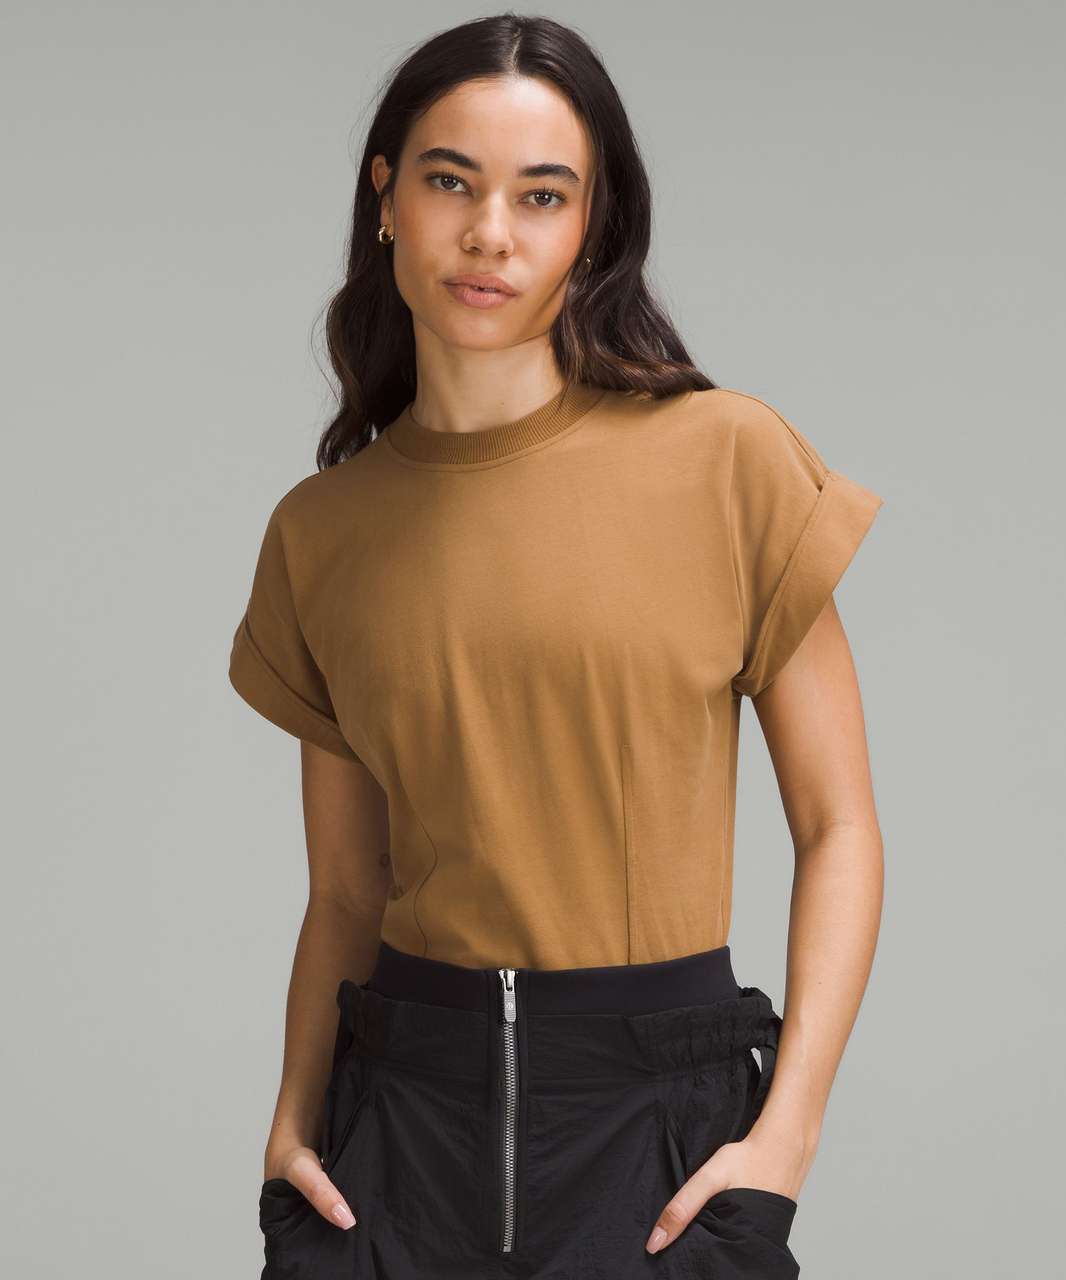 Lululemon Heavyweight Cotton T-Shirt Bodysuit - Bold Beige